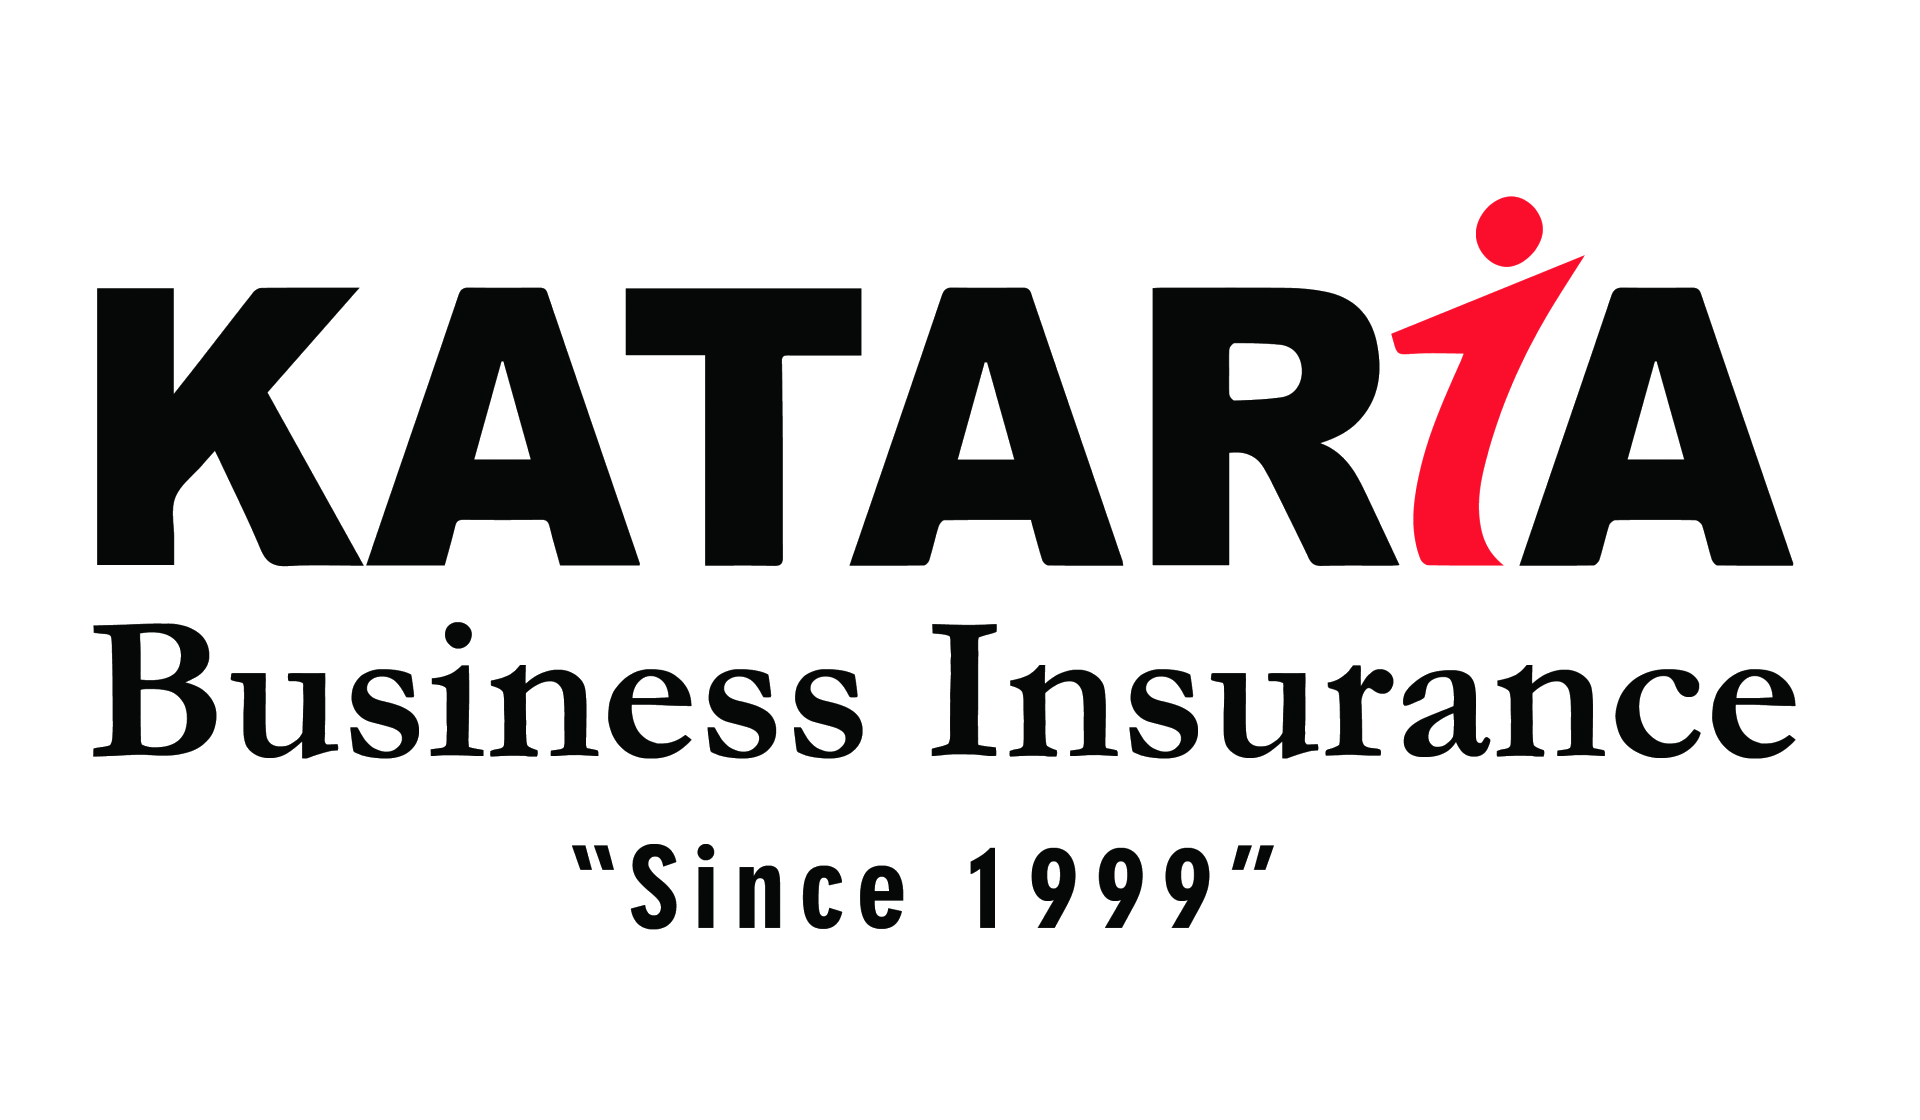 Kataria Business Logo1-02